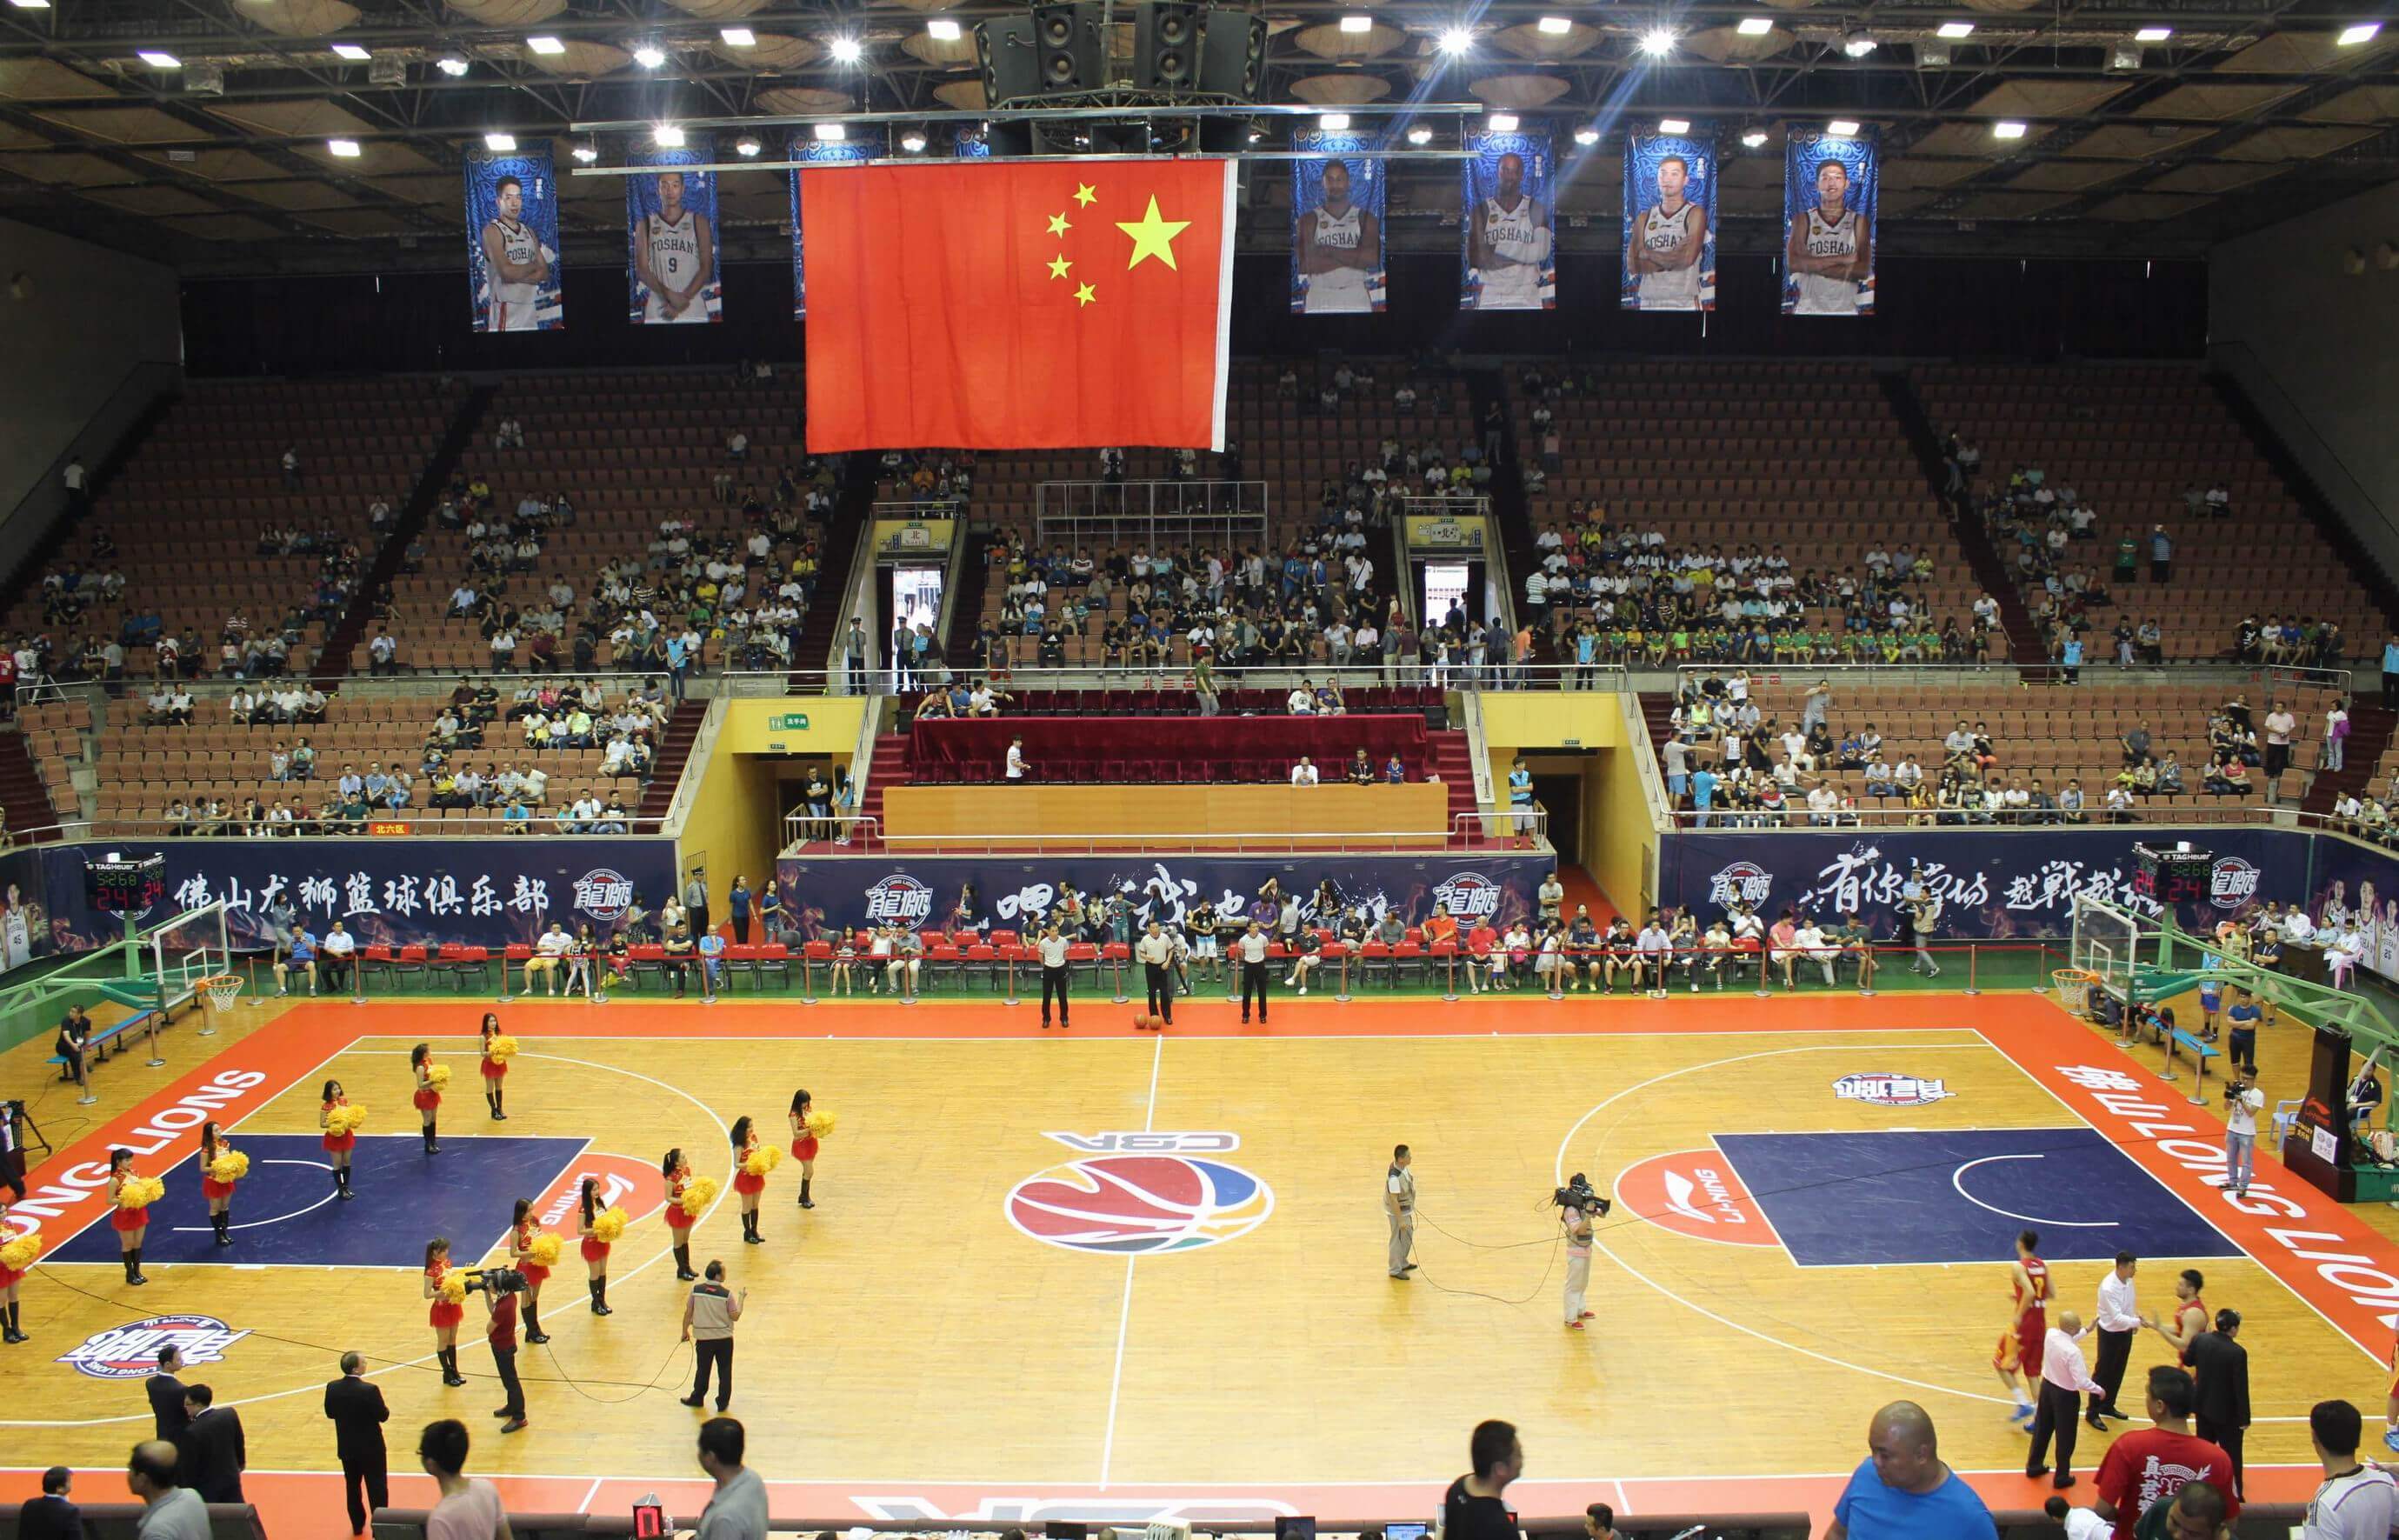 Nanhai Stadium(home court of CBA Foshan Team) Upgraded the Light System